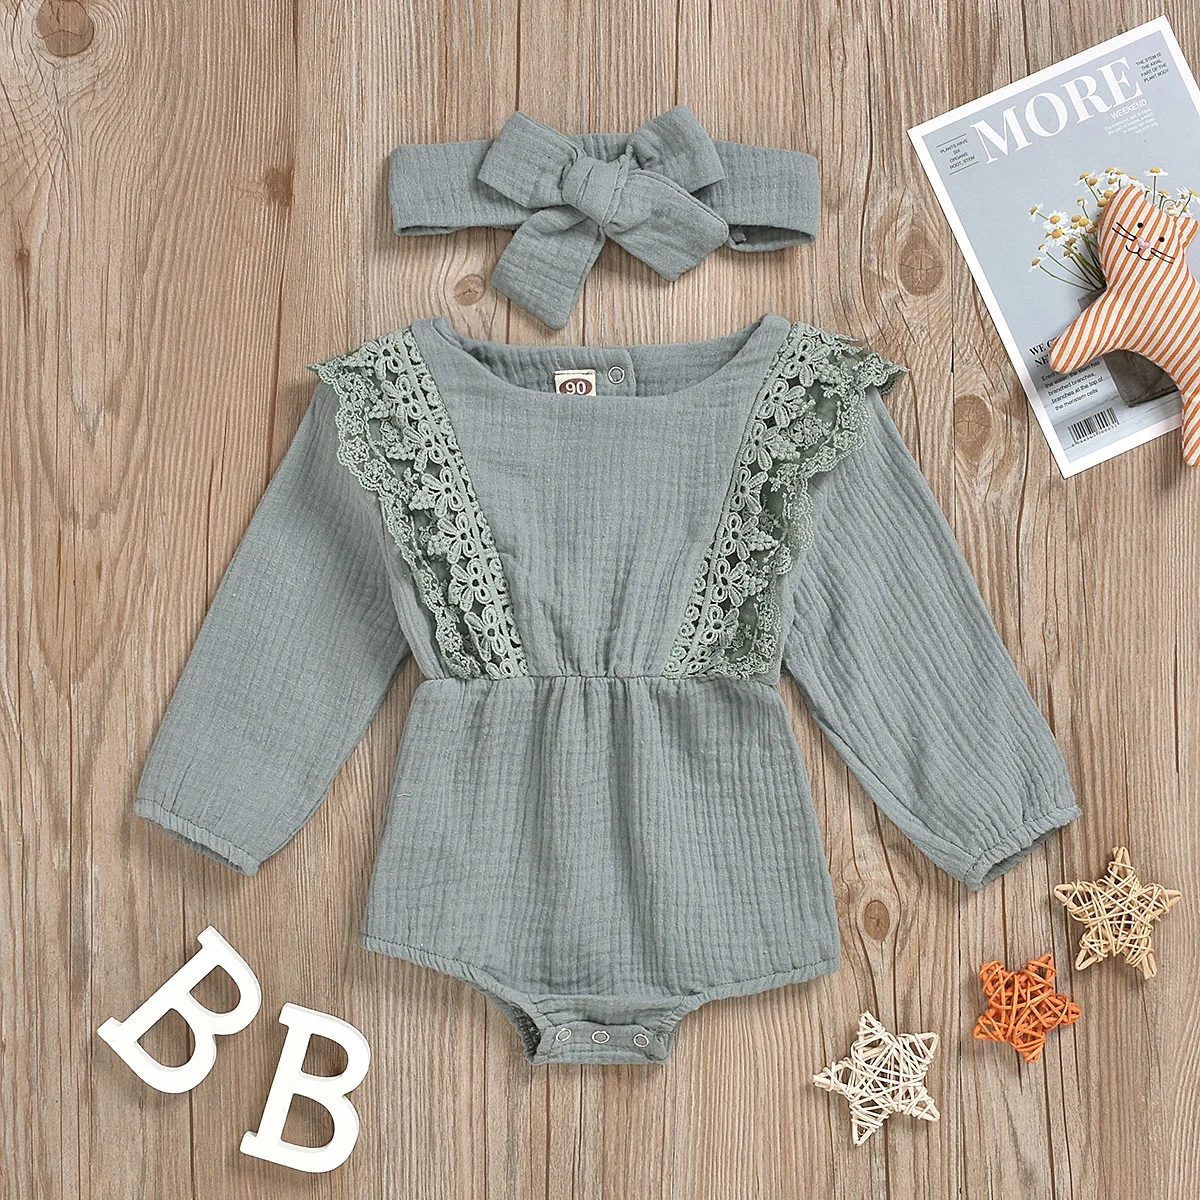 Spring Autumn Infant Baby Girls Romper + Headband Cotton Linen Long Sleeve Lace Infant Playsuit Jumpsuit Newborn Clothes Cotton baby suit